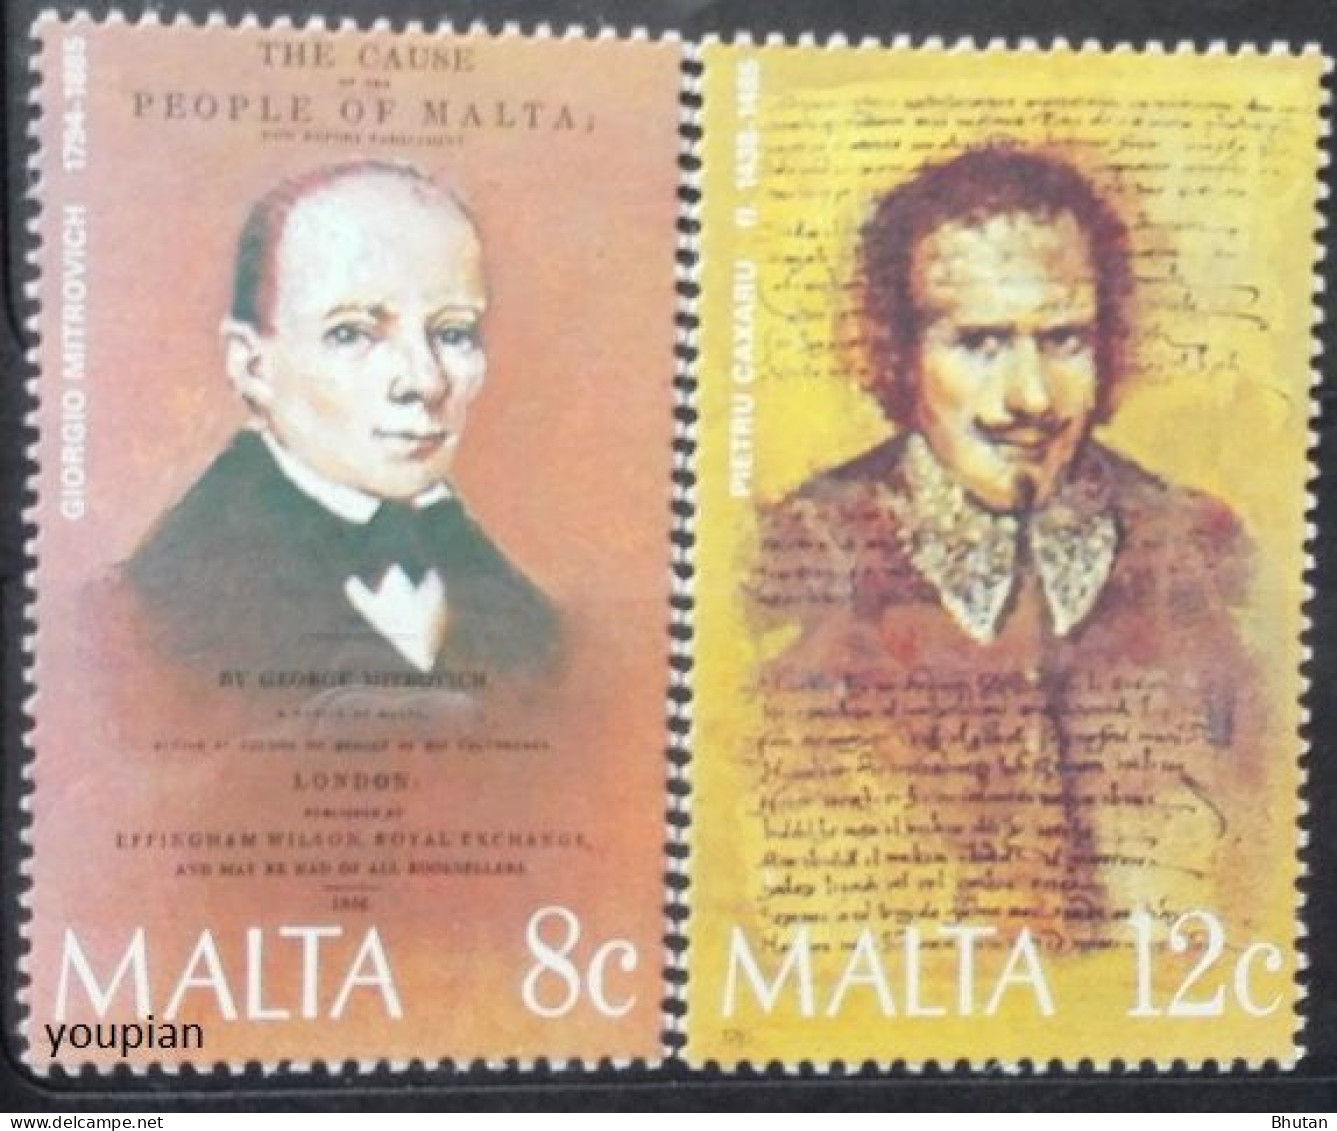 Malta 1985, Personalities, MNH Stamps Set - Malta